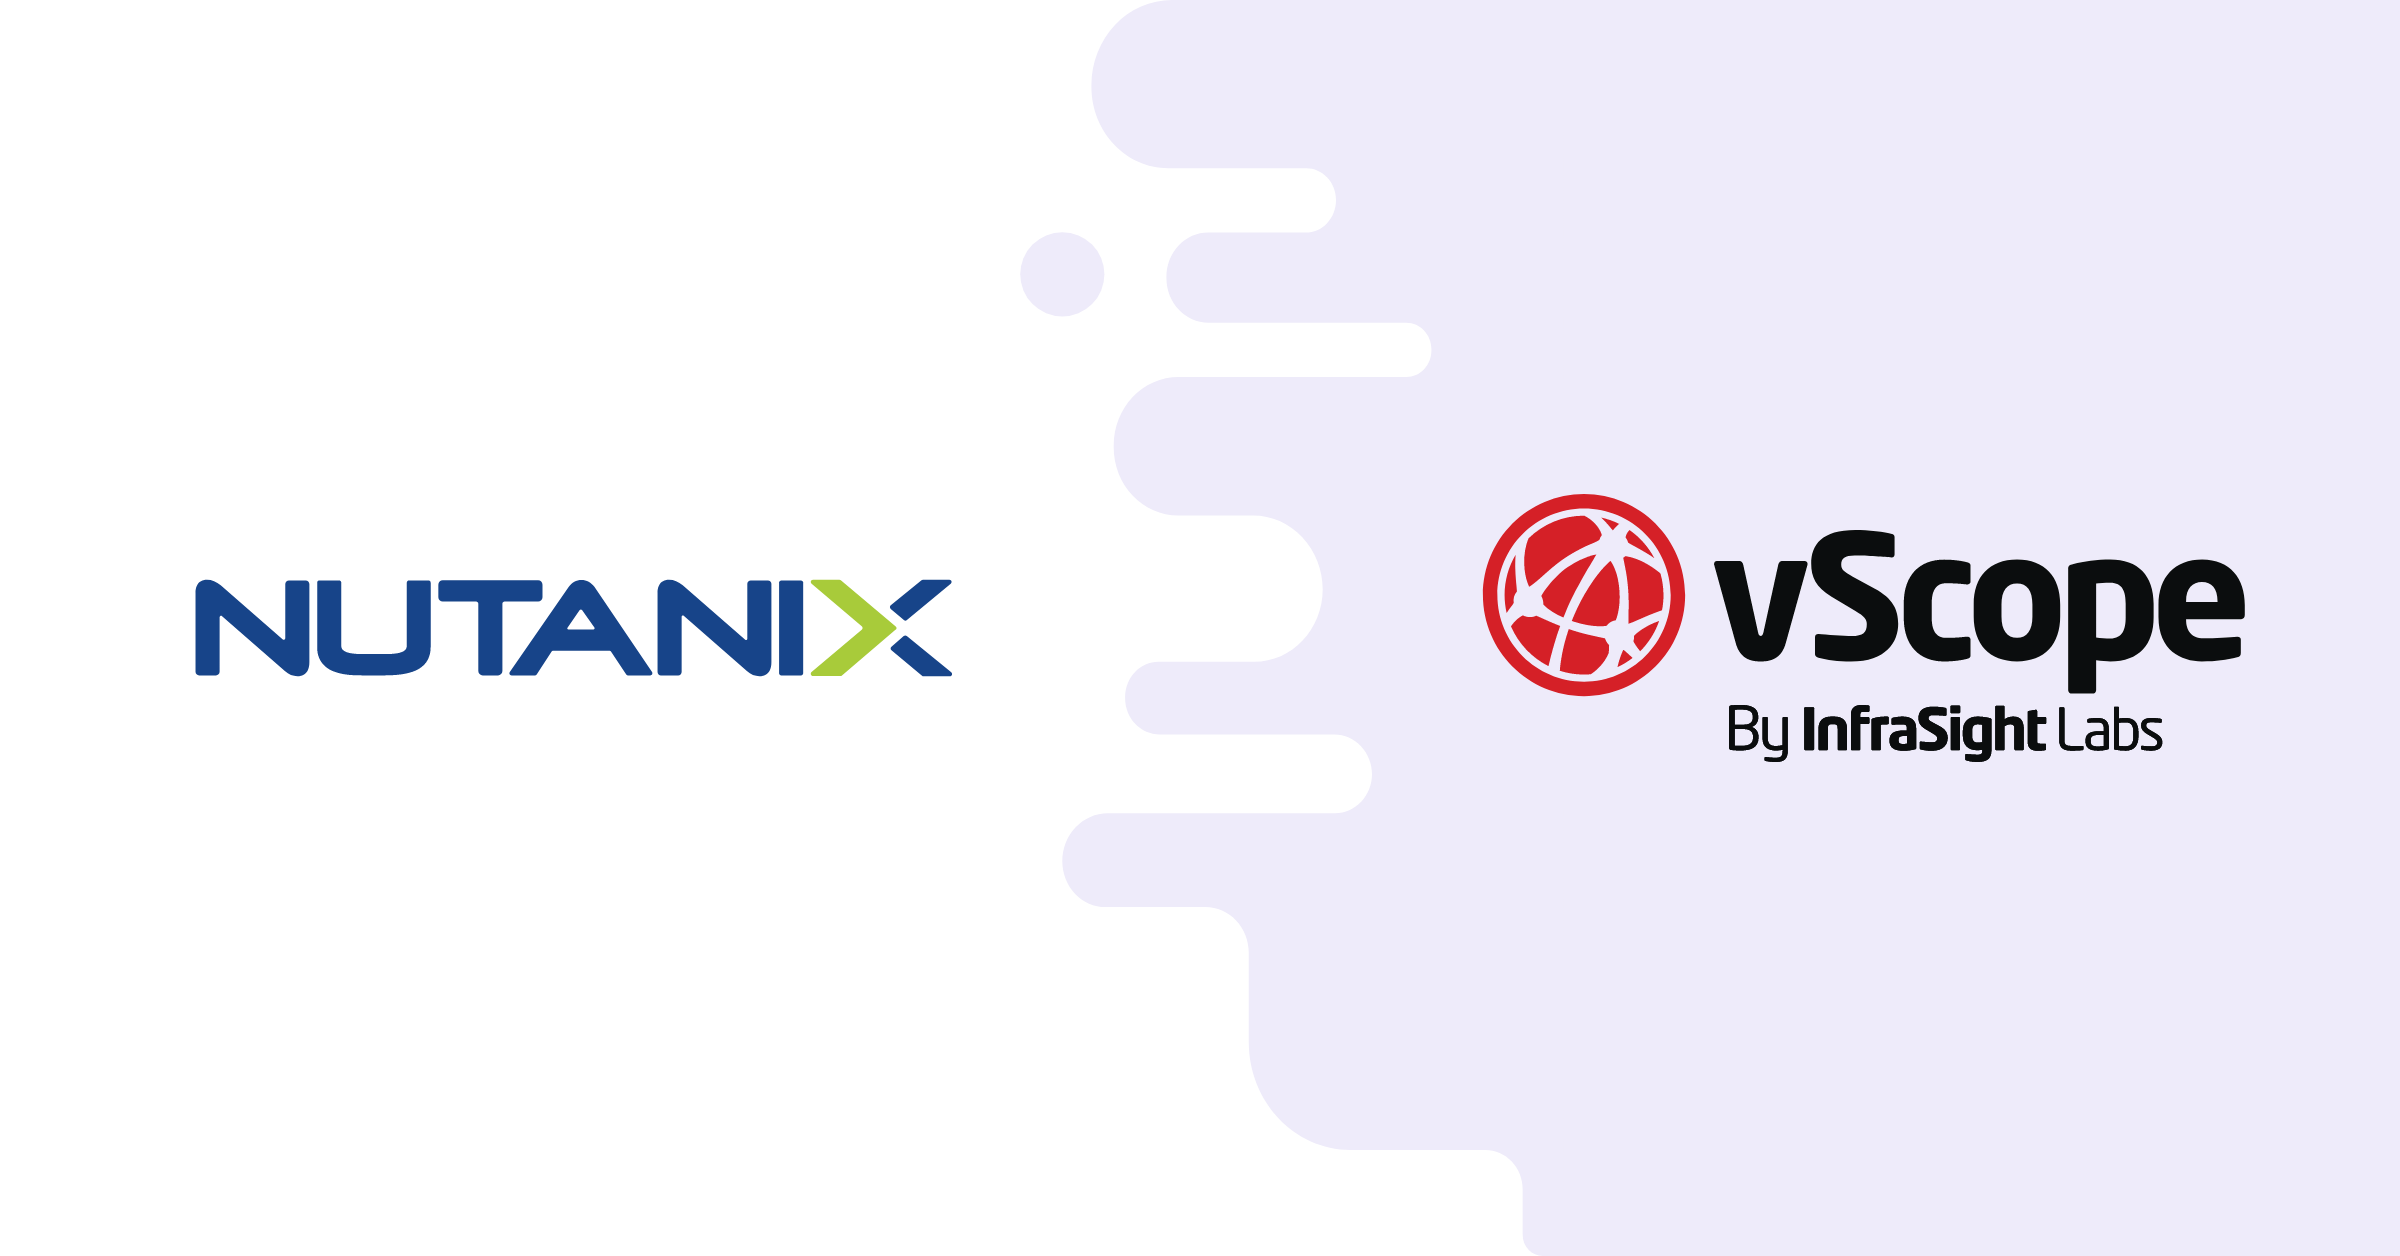 Nutanix and vScope logo